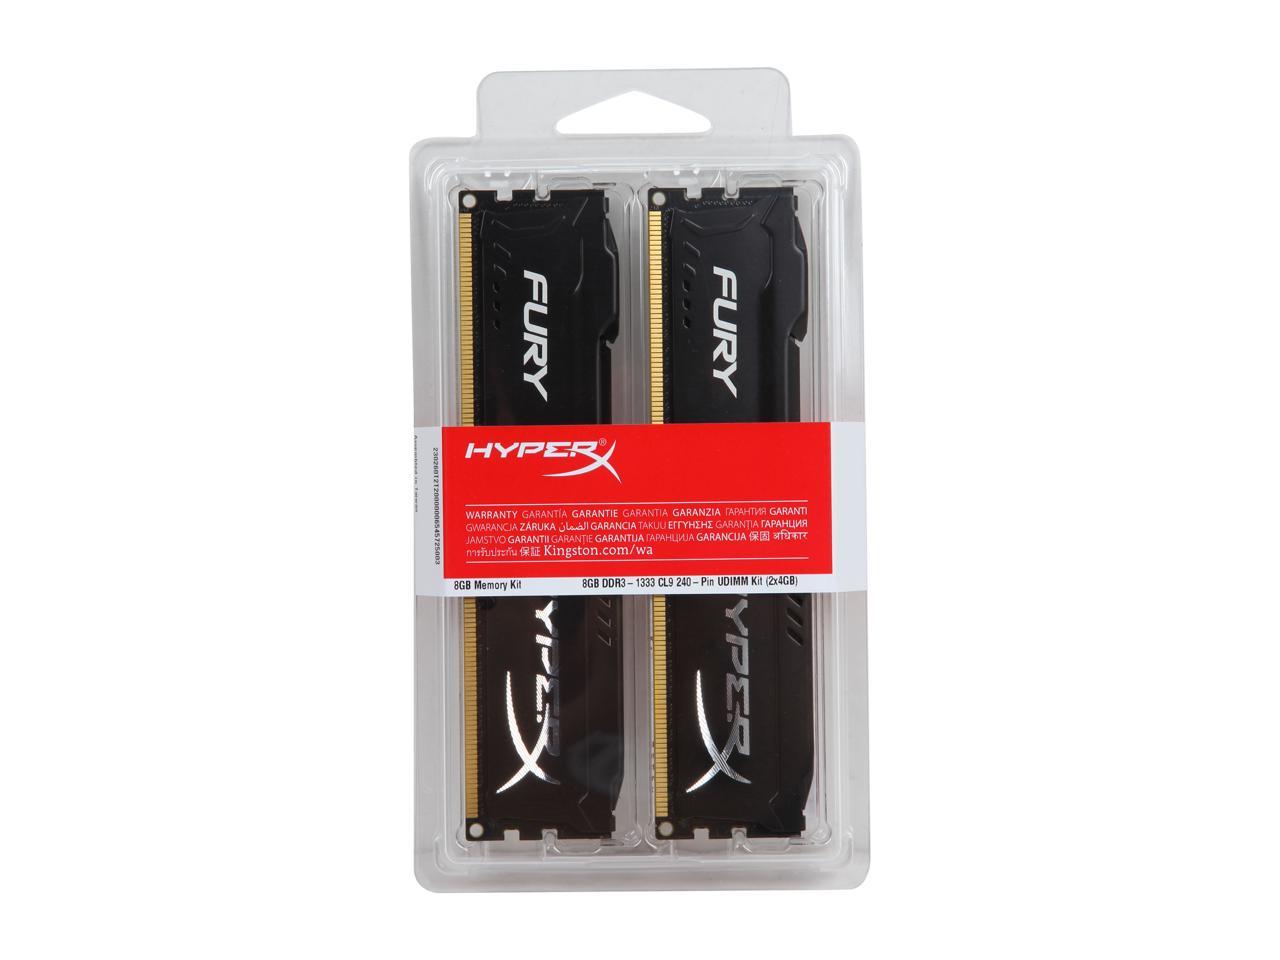 HyperX HX313C9FBK2/8 FURY Black Kit of 2 x 4GB memory 1333 MHz DDR3 CL9 DIMM 8 GB